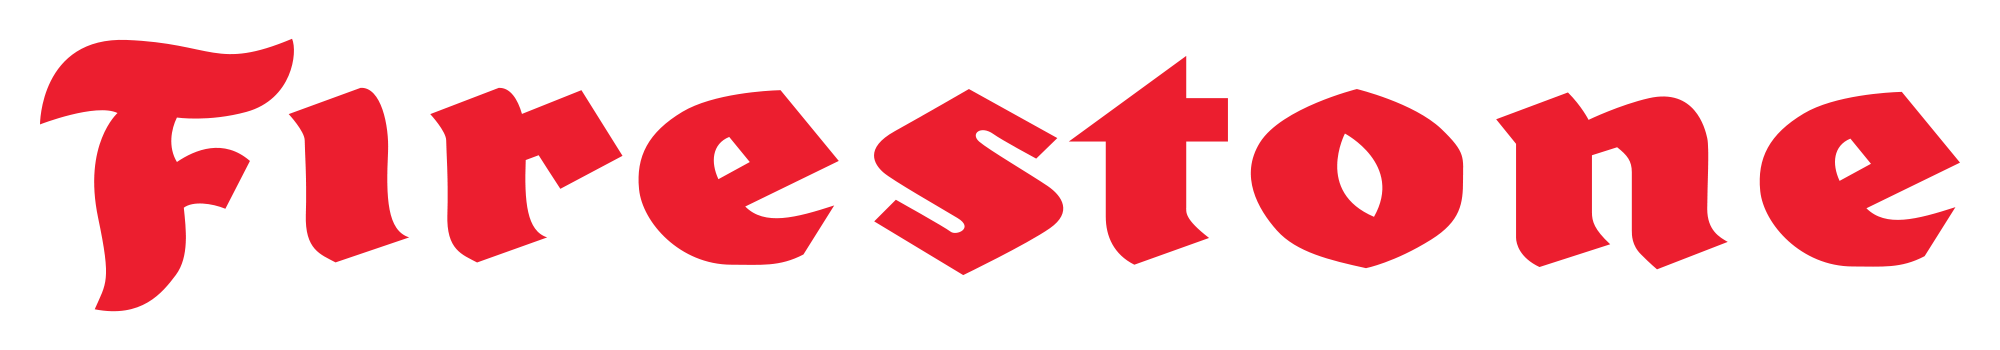 firestone-logo-3000x350